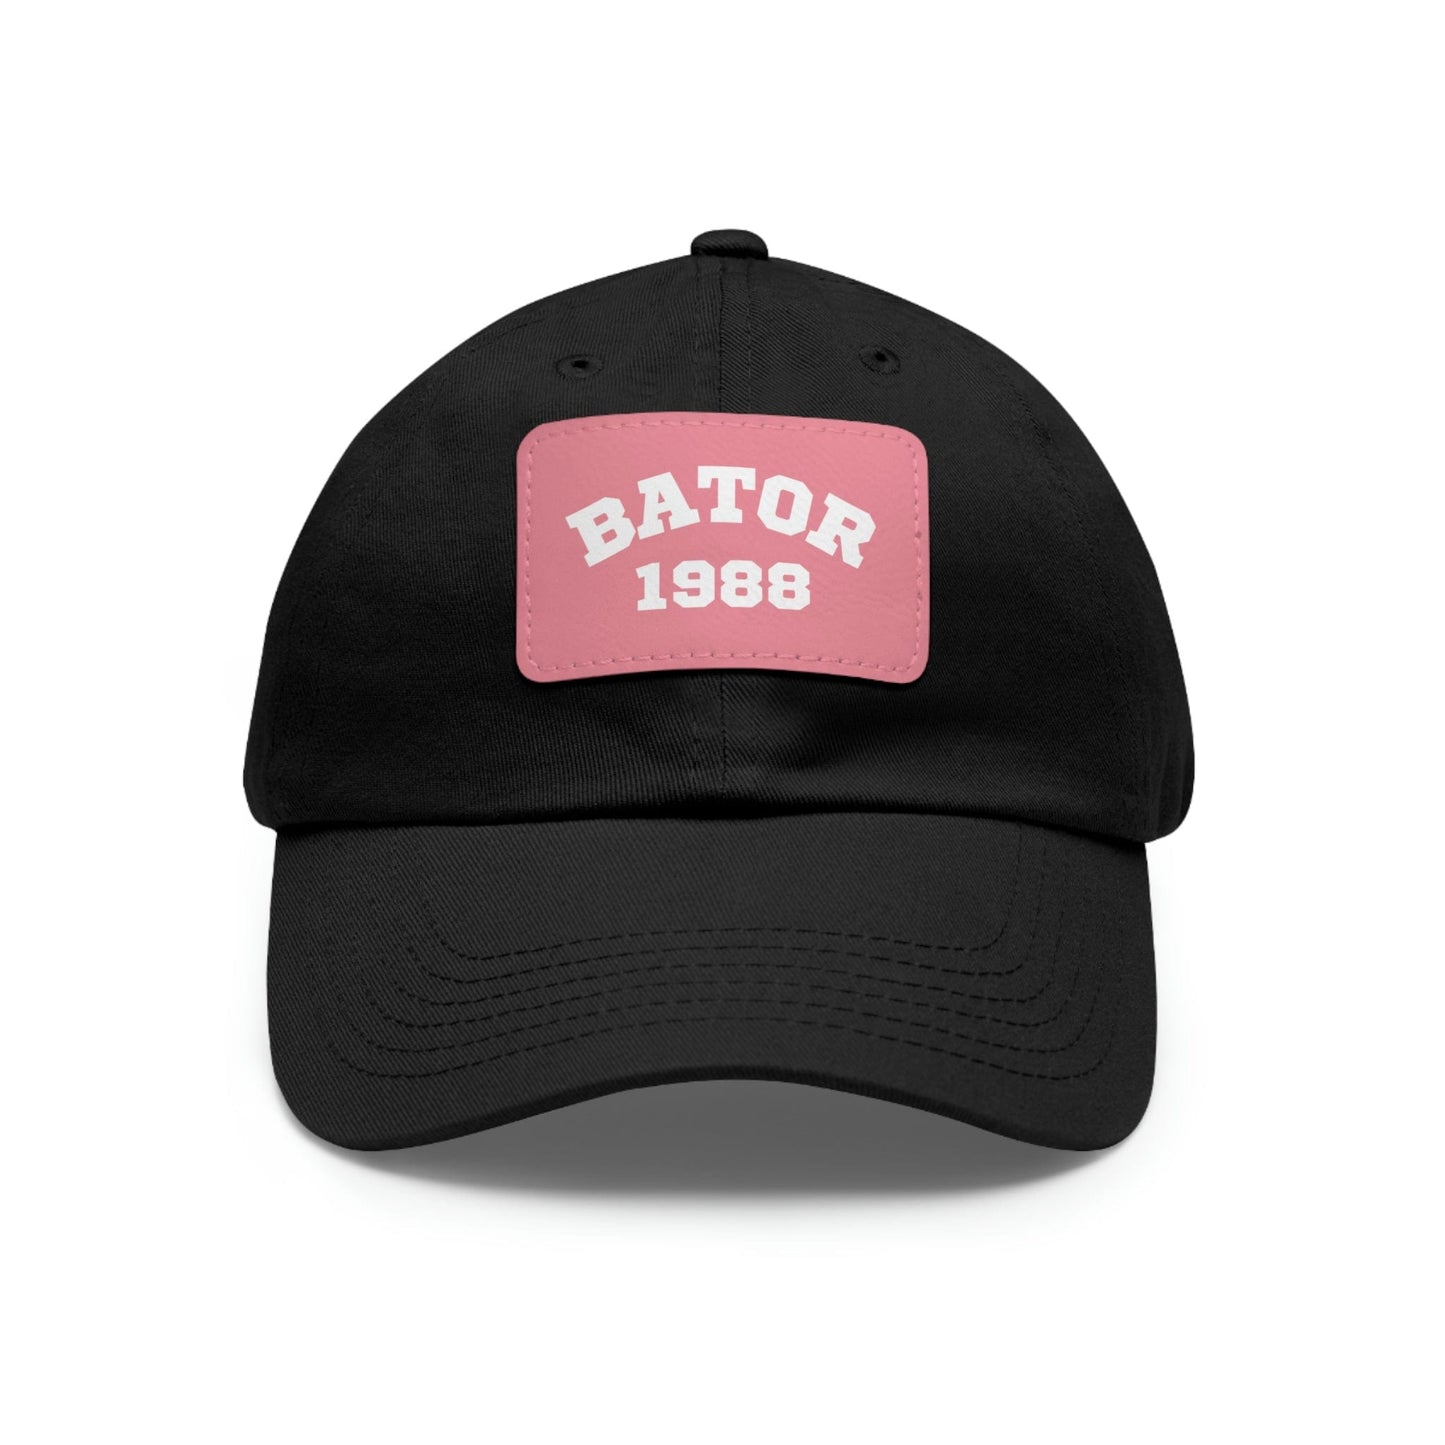 Hats Black / Pink patch / Rectangle / One size OG Bator Dad Hat LEATHERDADDY BATOR